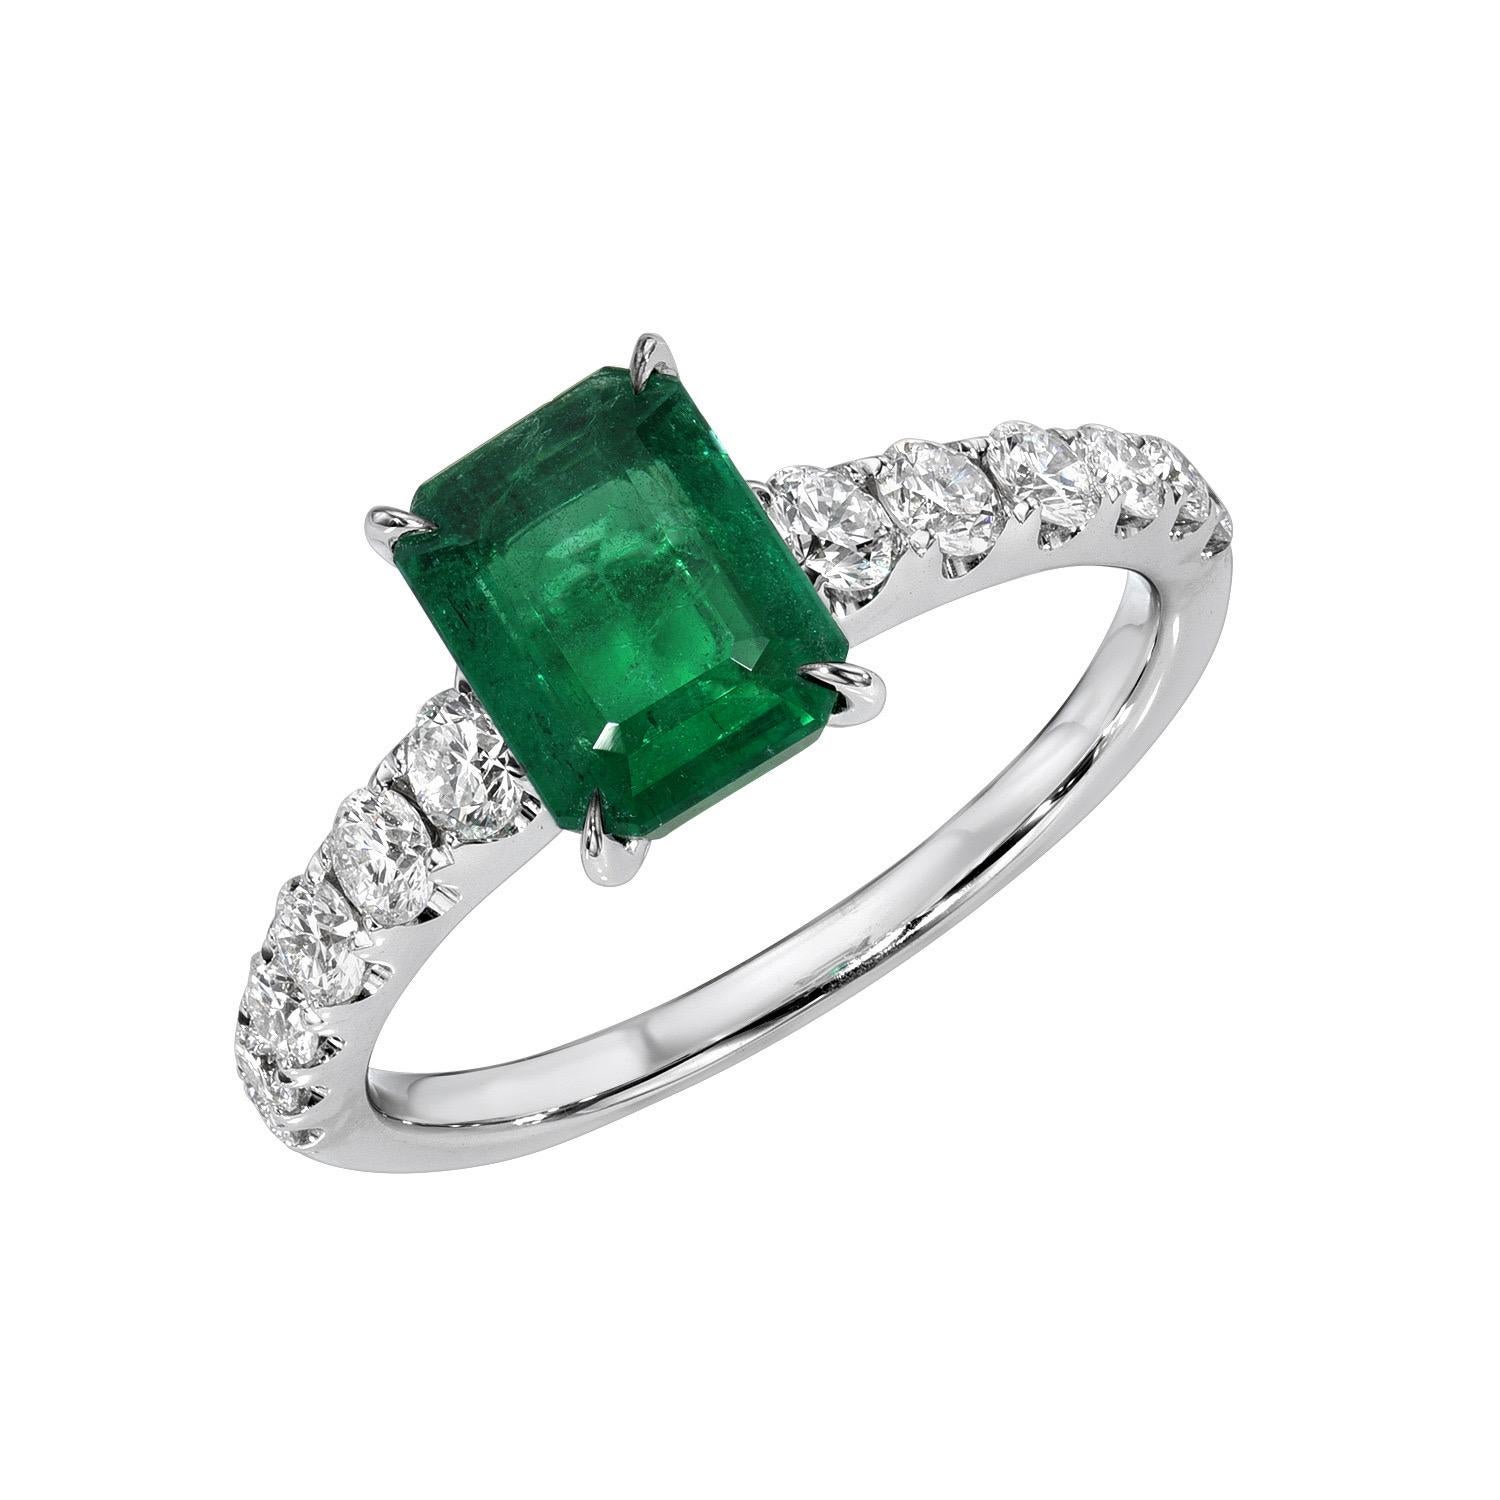 Contemporary Emerald Ring 1.43 Carat Emerald Cut For Sale